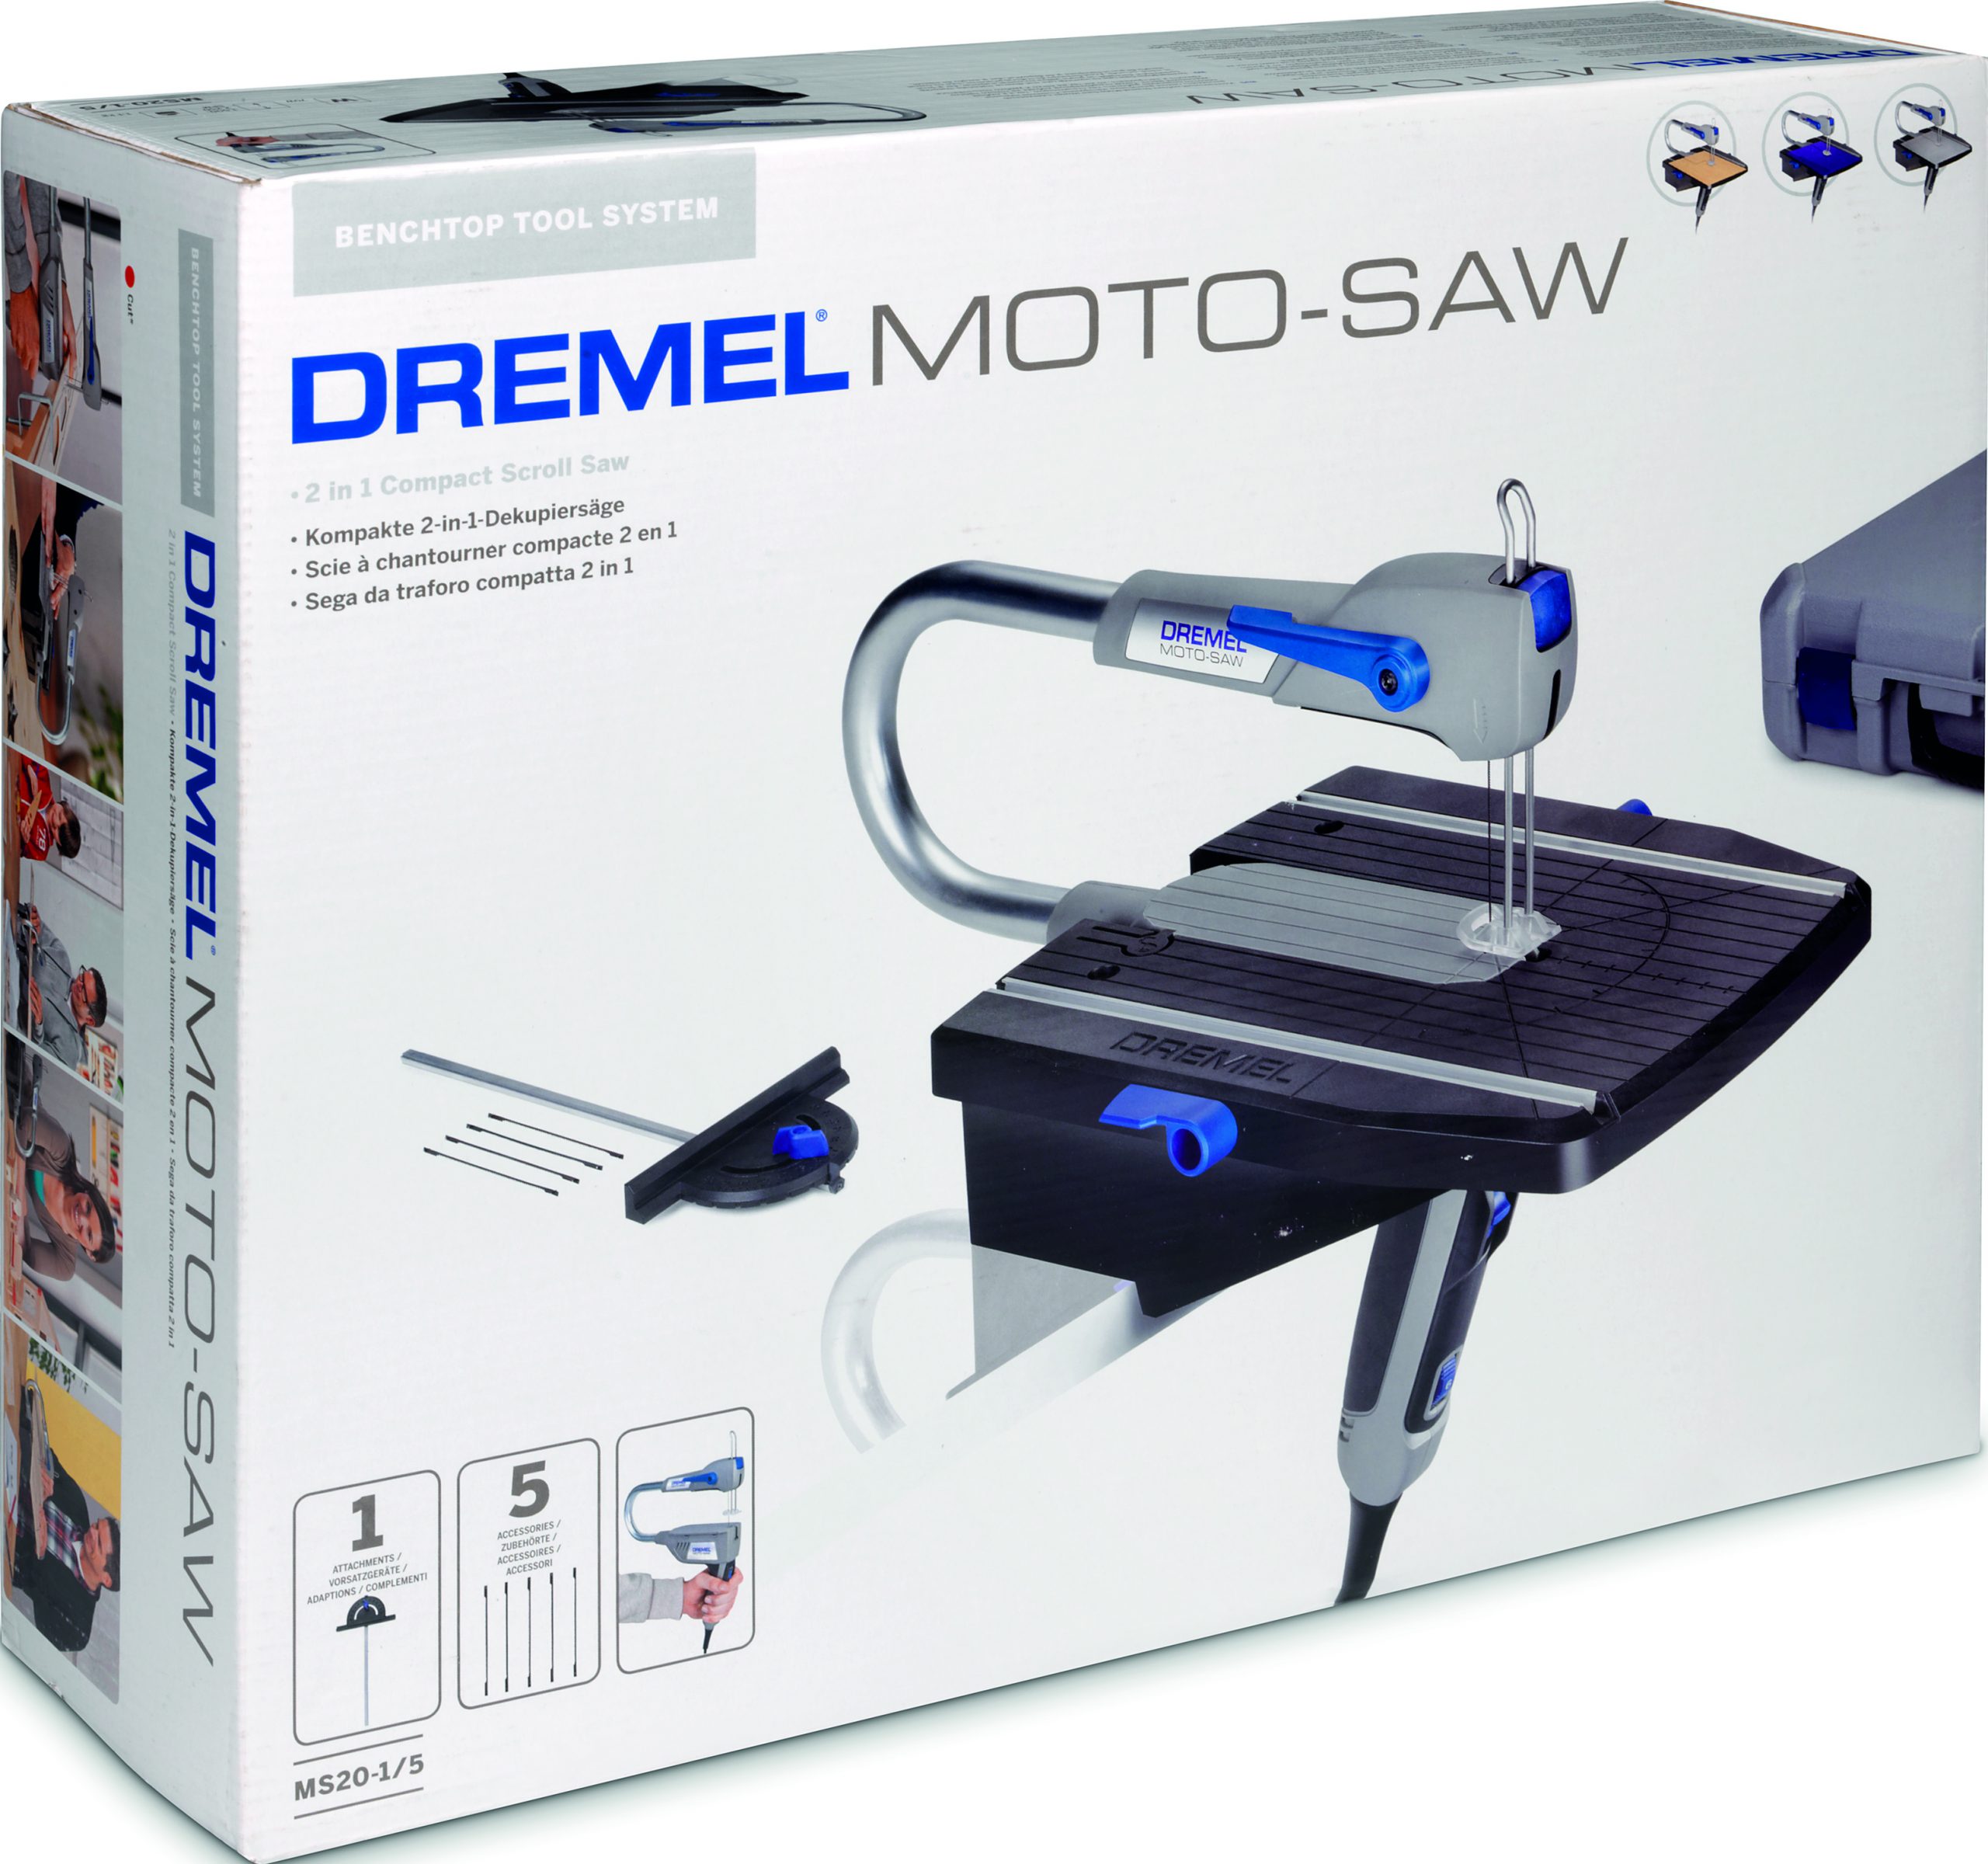 DREMEL MOTO-SAW (MS20-1/5) – GLOBALL HARDWARE & MACHINERY SDN BHD